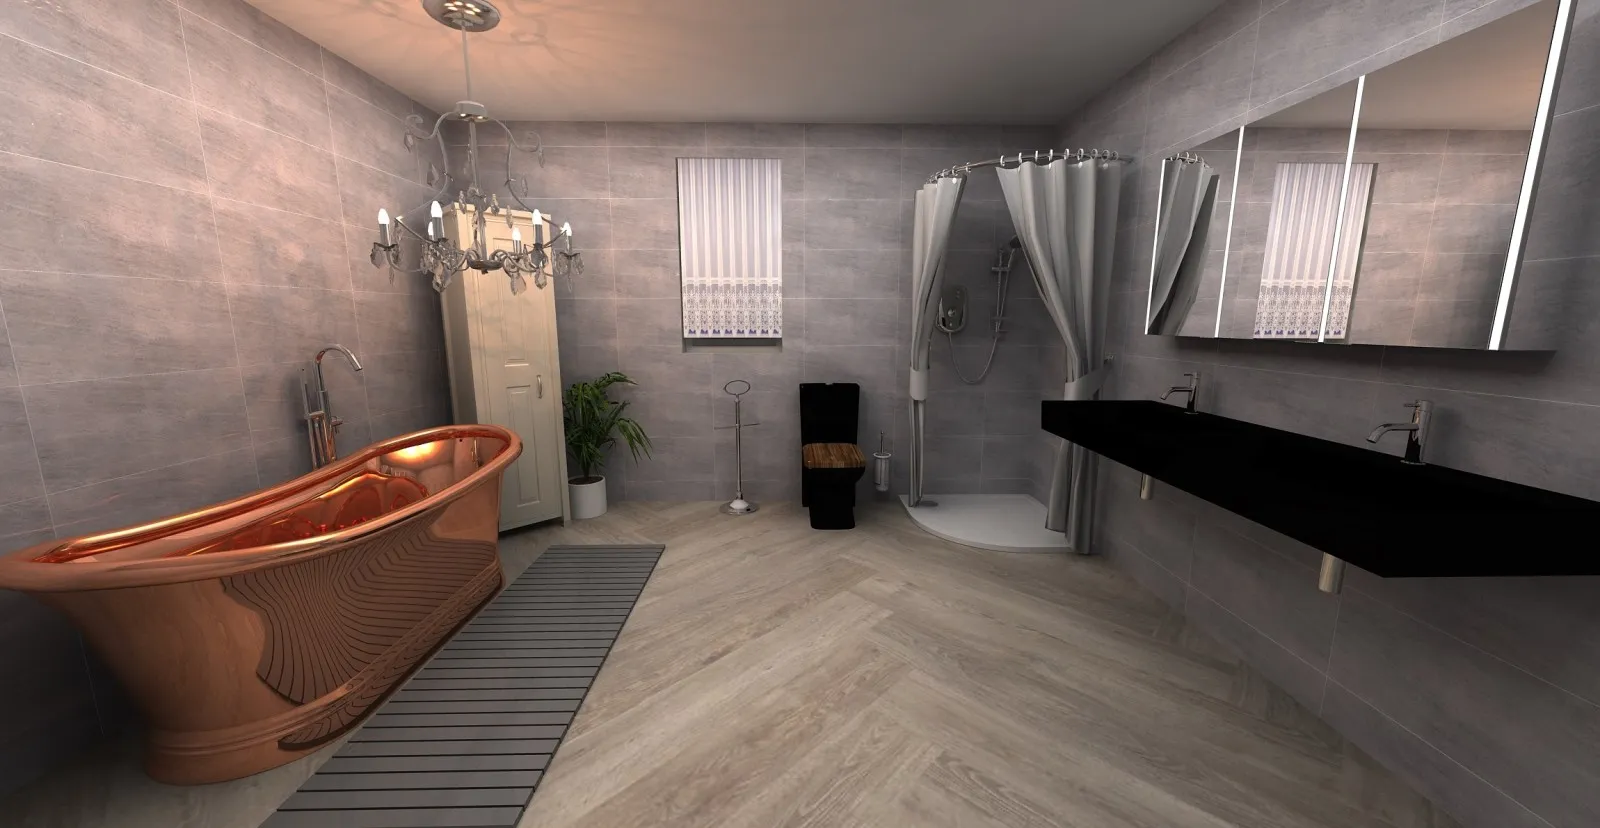 Digital lifestyle image of bathroom desiged in the Sanctuary Bathrooms' 3D design tool